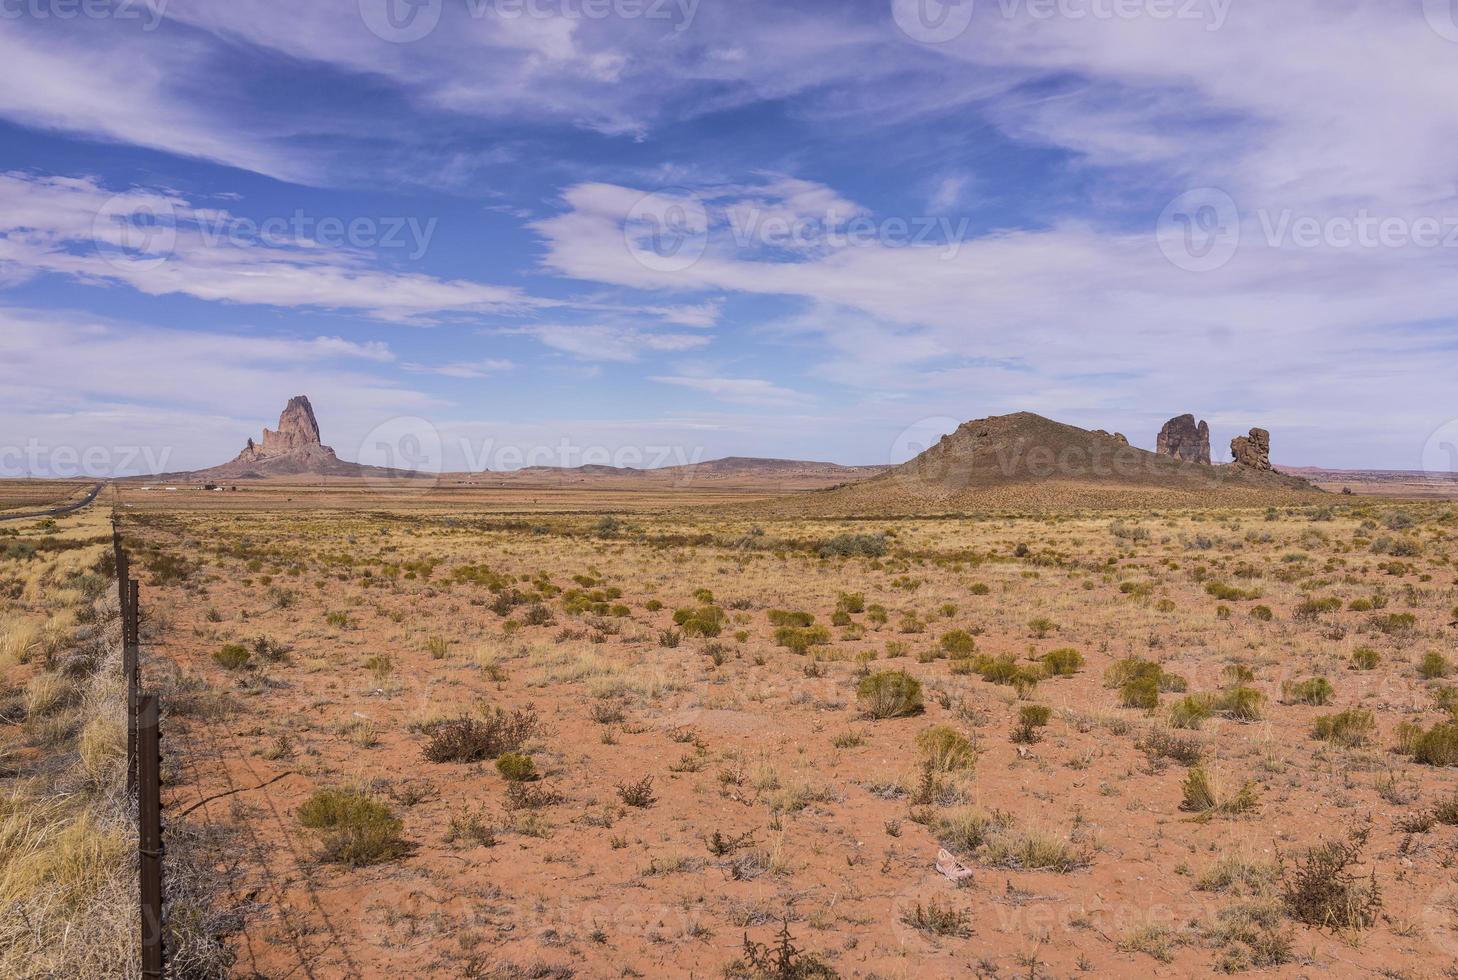 monumentdal från natursköna väg 163 (Arizona, USA) foto